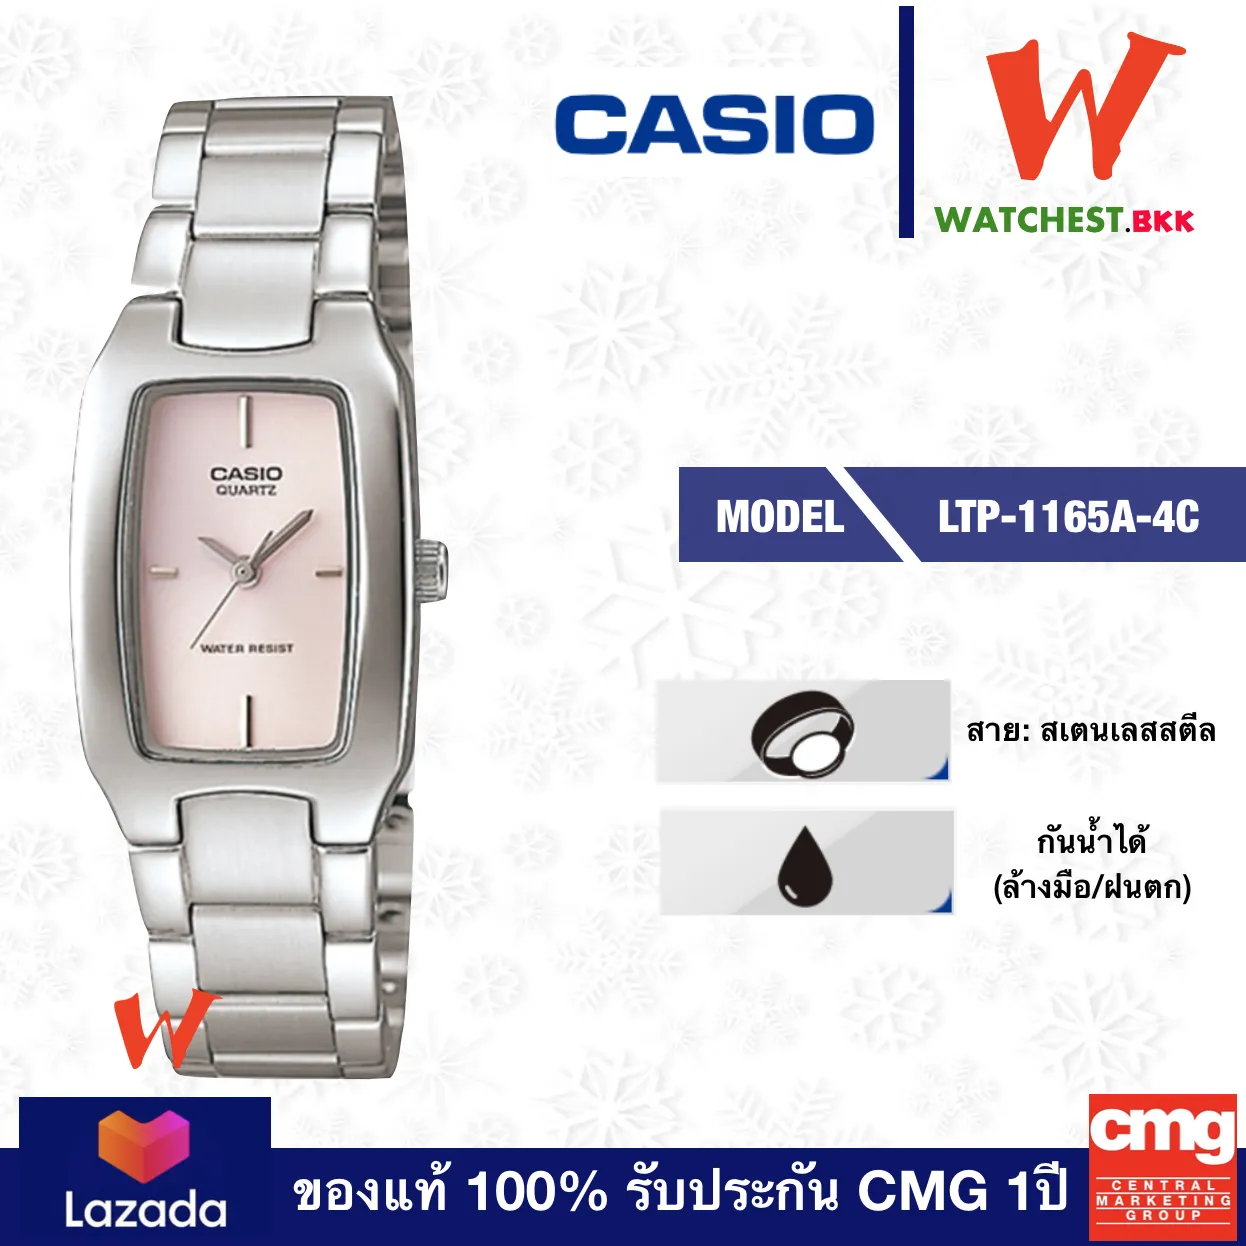 casio นาฬิกาผู้หญิง สายสเตนเลส รุ่น LTP-1165A-4C, คาสิโอ LTP1165, LTP-1165A สายเหล็ก ตัวล็อกบานพับ (watchestbkk คาสิโอ แท้ ของแท้100% ประกัน CMG)